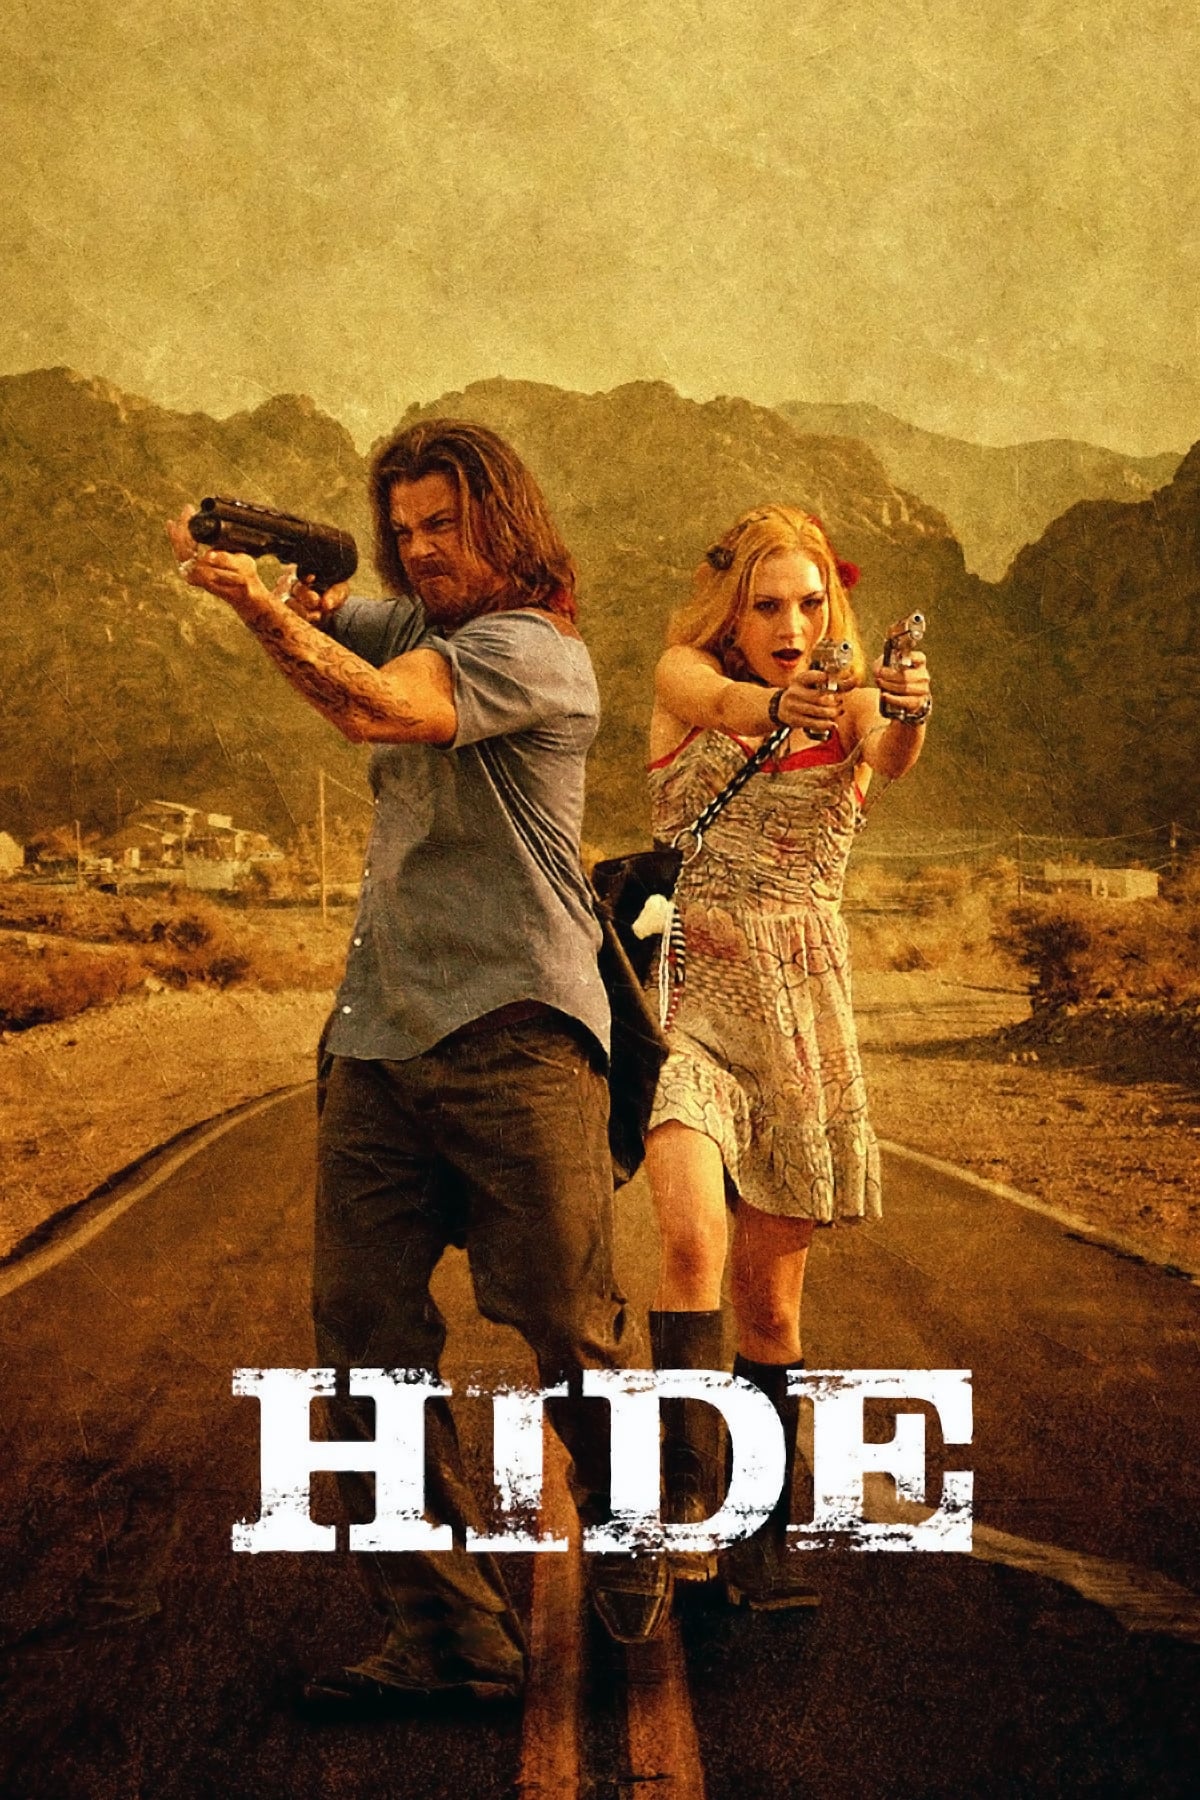 Hide (2008)